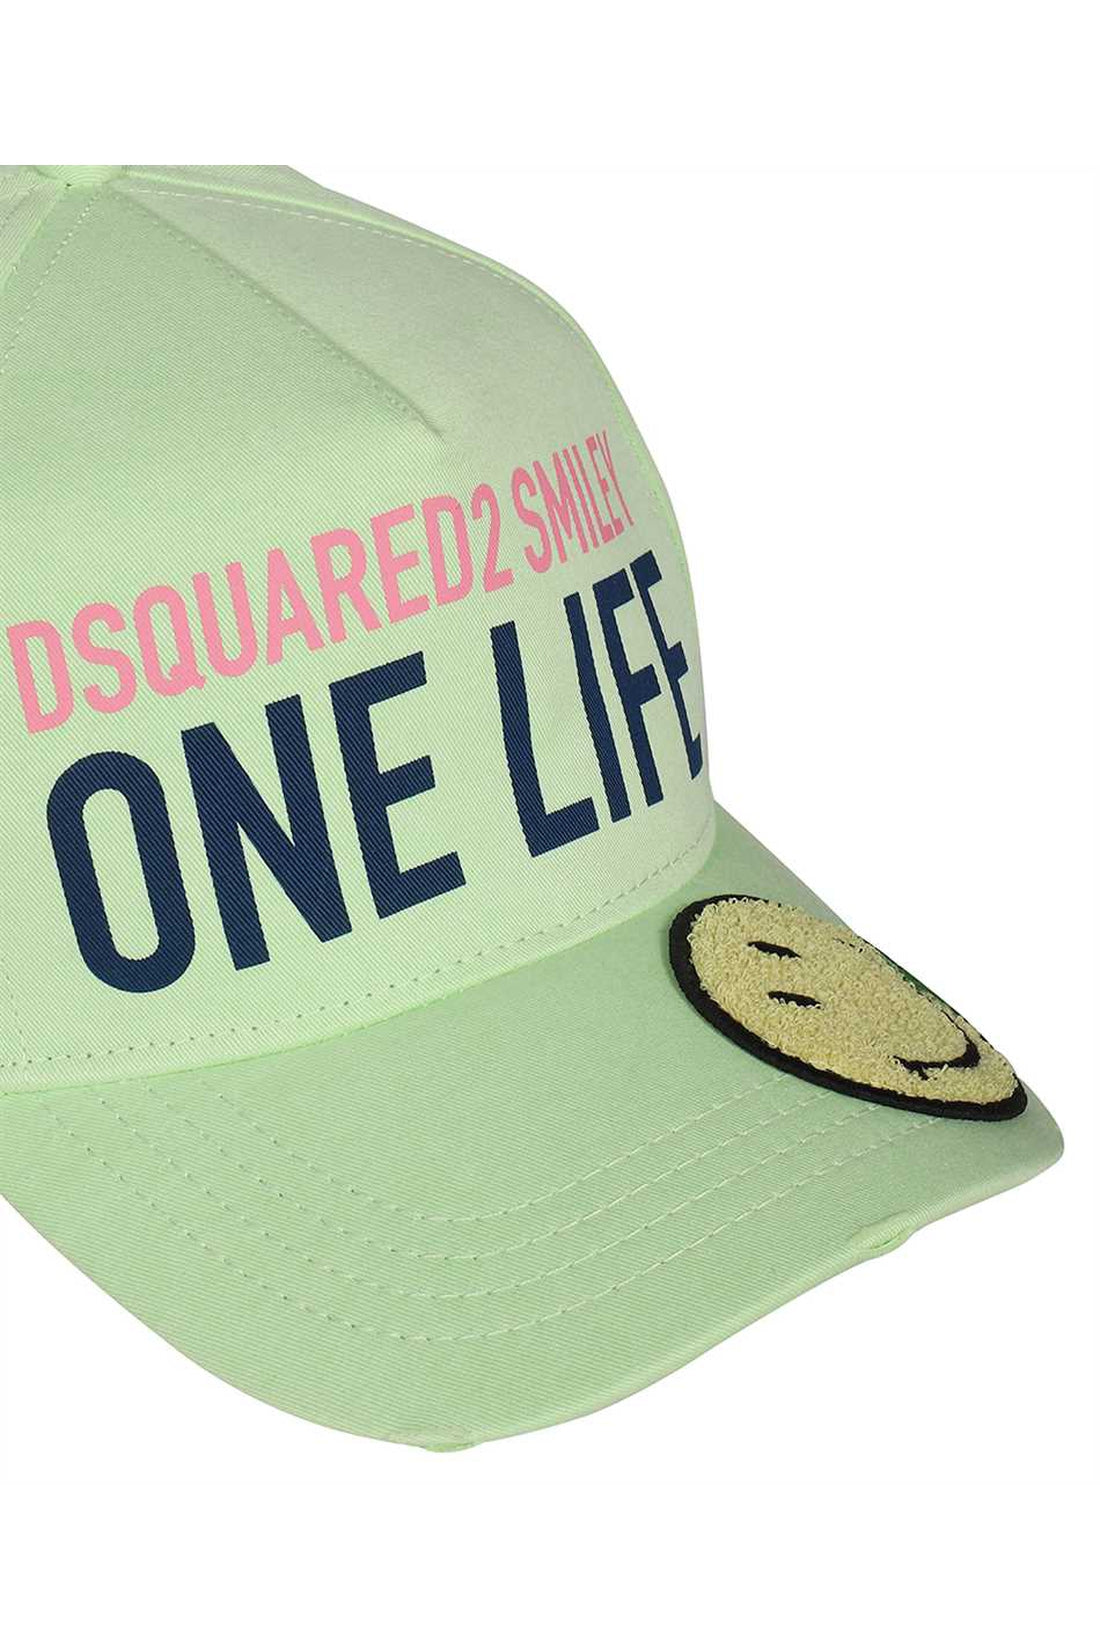 Dsquared2-OUTLET-SALE-Smiley gabardine baseball cap-ARCHIVIST